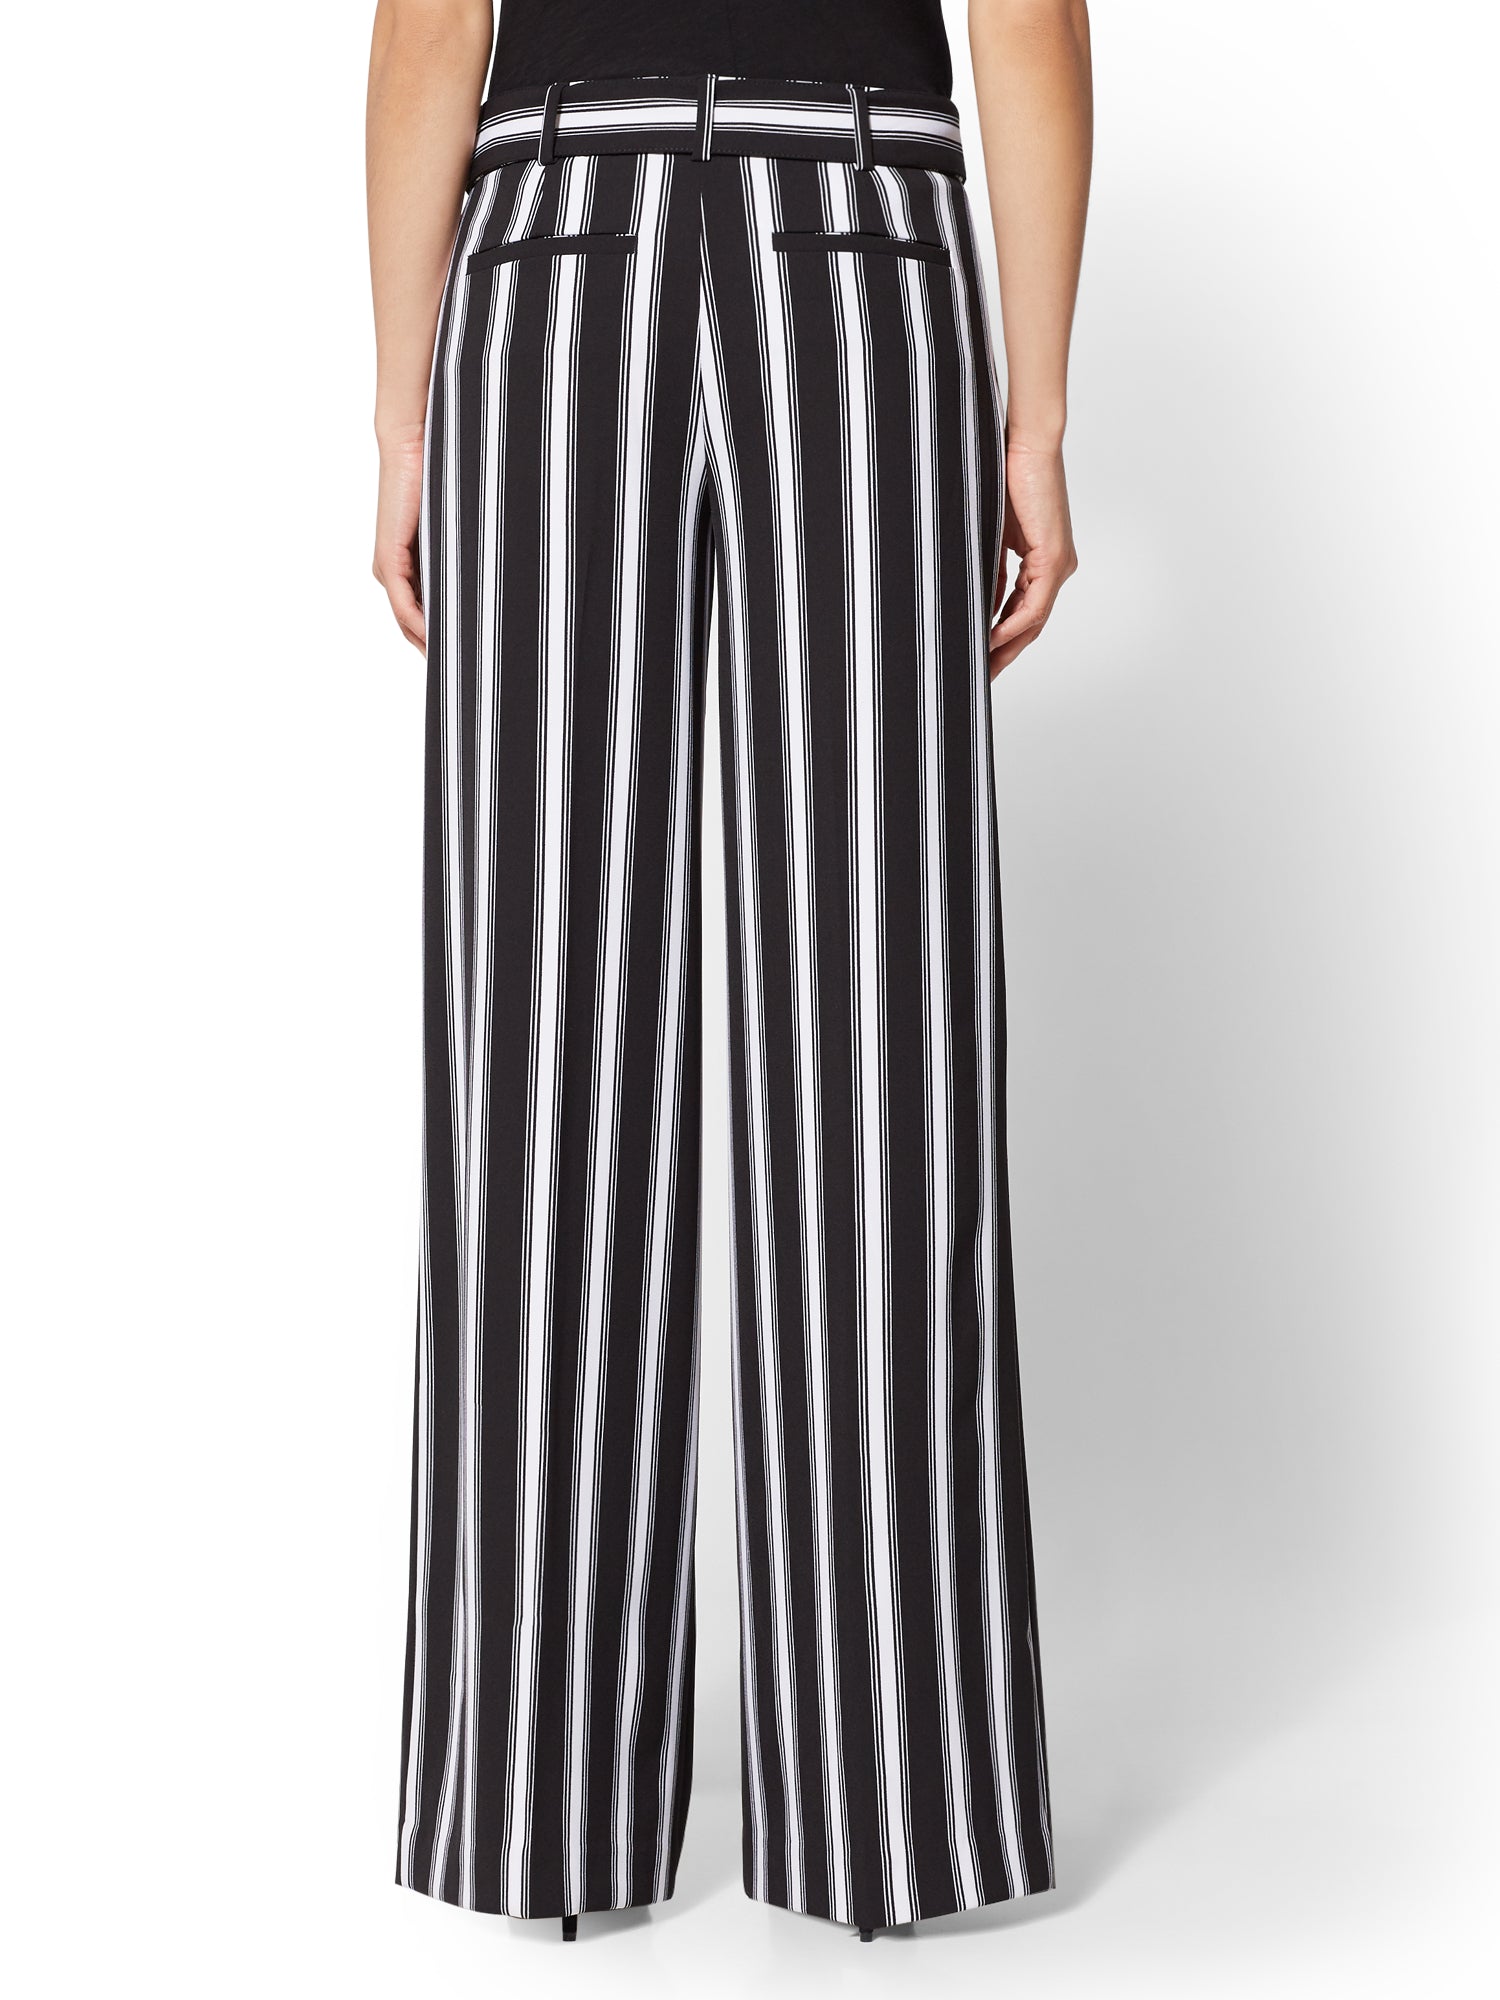 New York Company 7th Avenue Pant Black White Stripe